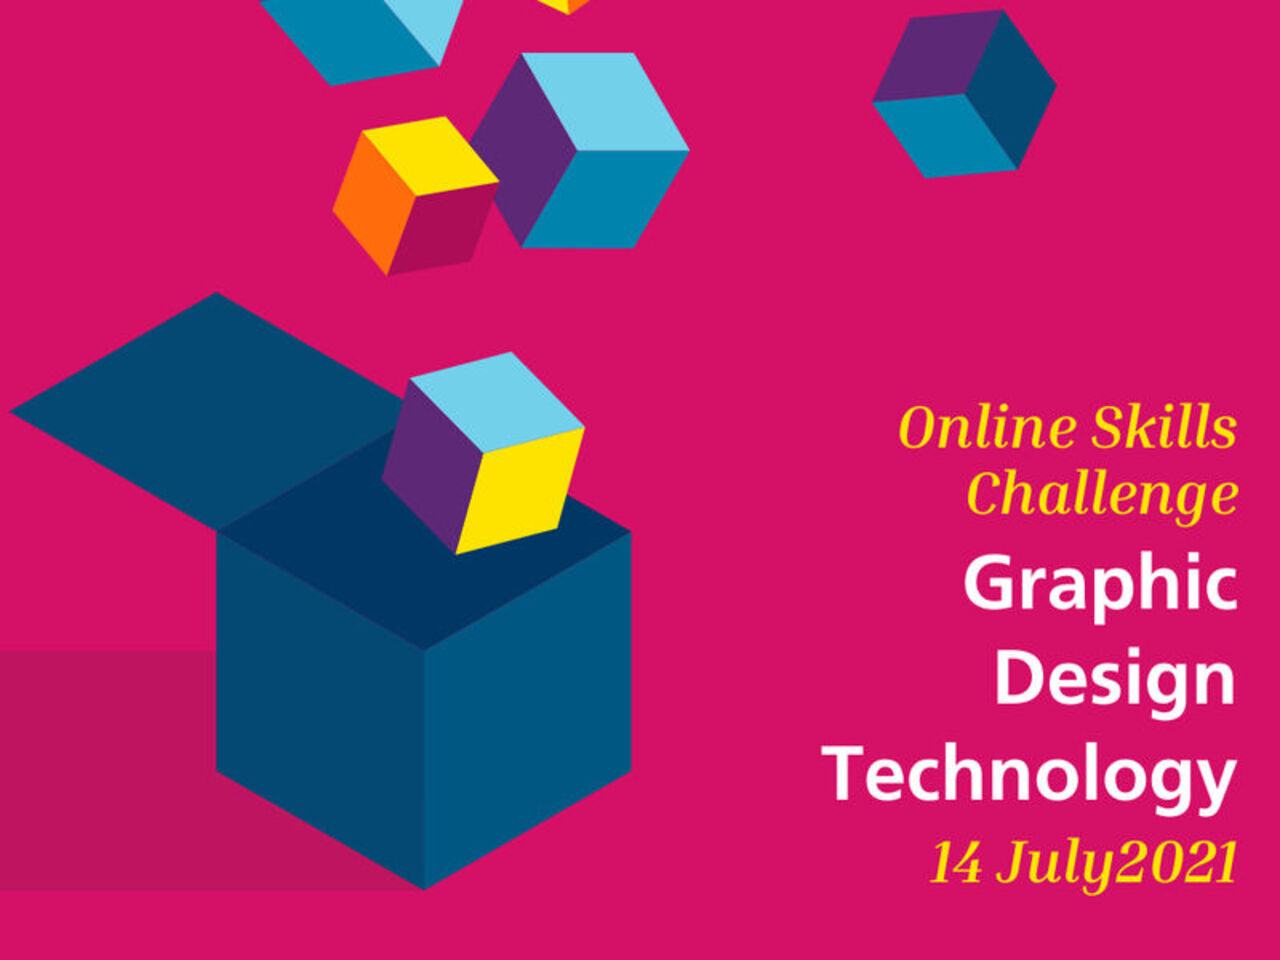 Take part in Online Skills Challenge in Graphic Design Technology from WorldSkills Europe